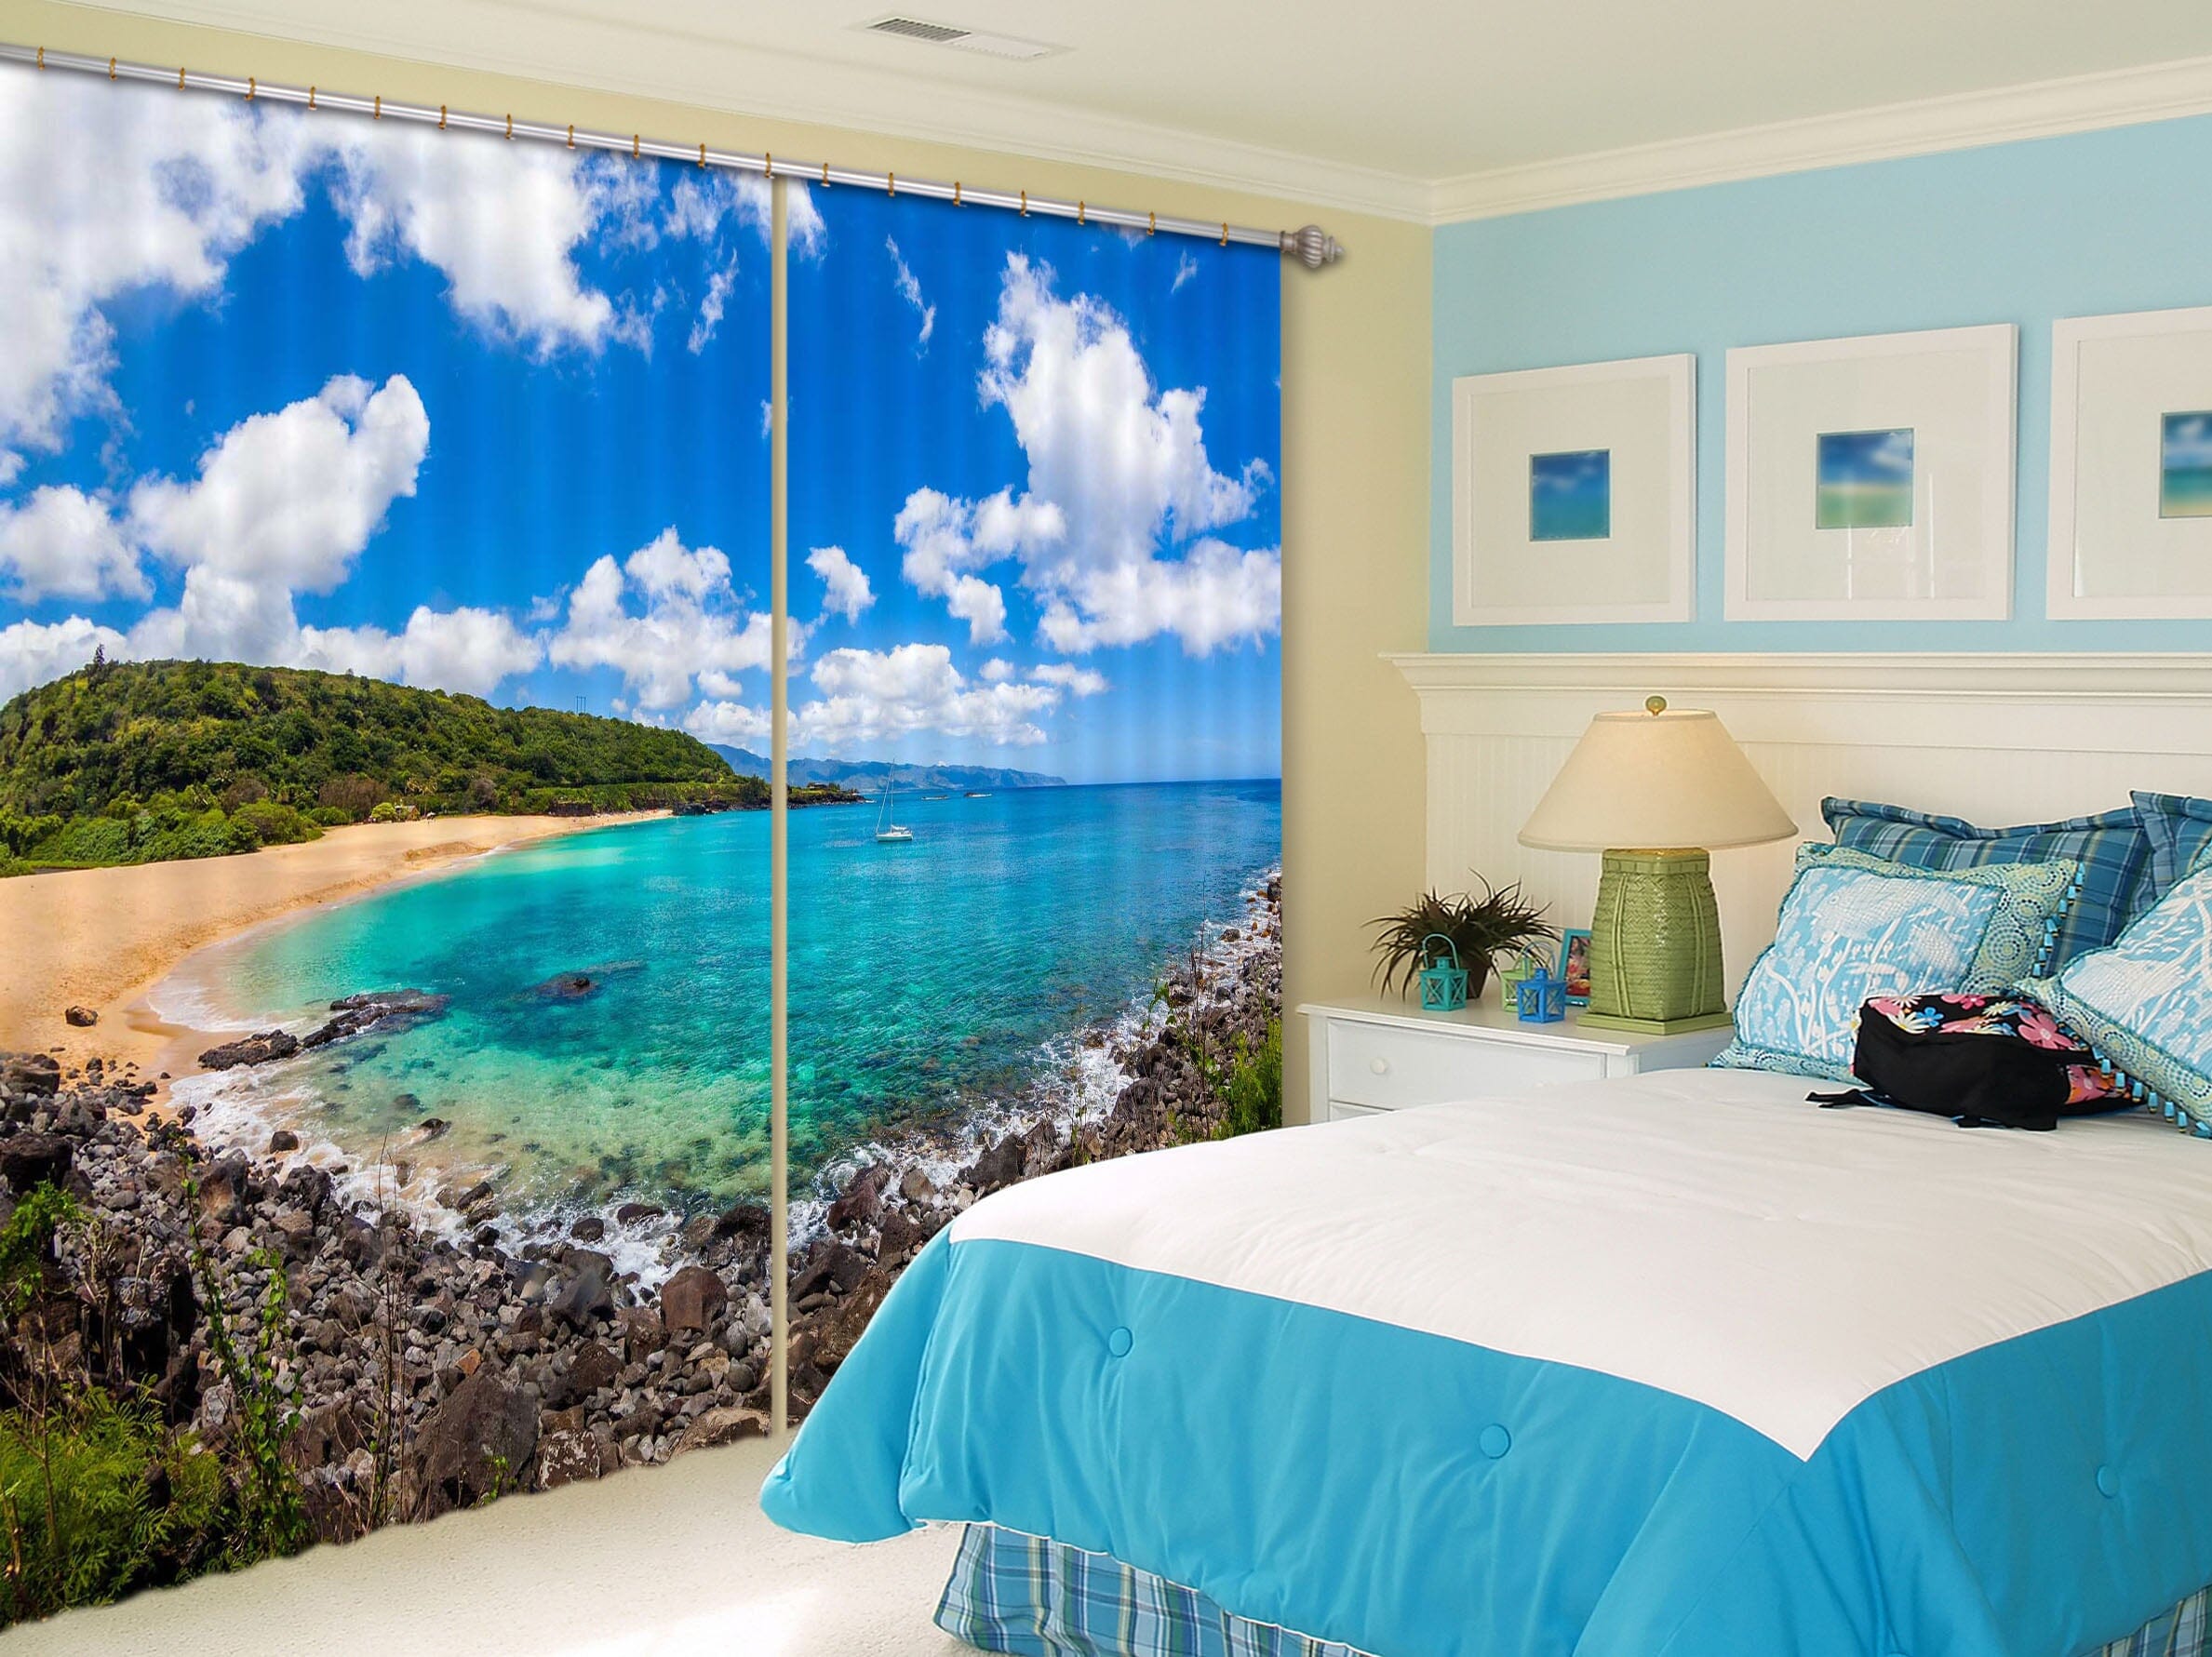 3D Blue Lake 812 Curtains Drapes Wallpaper AJ Wallpaper 